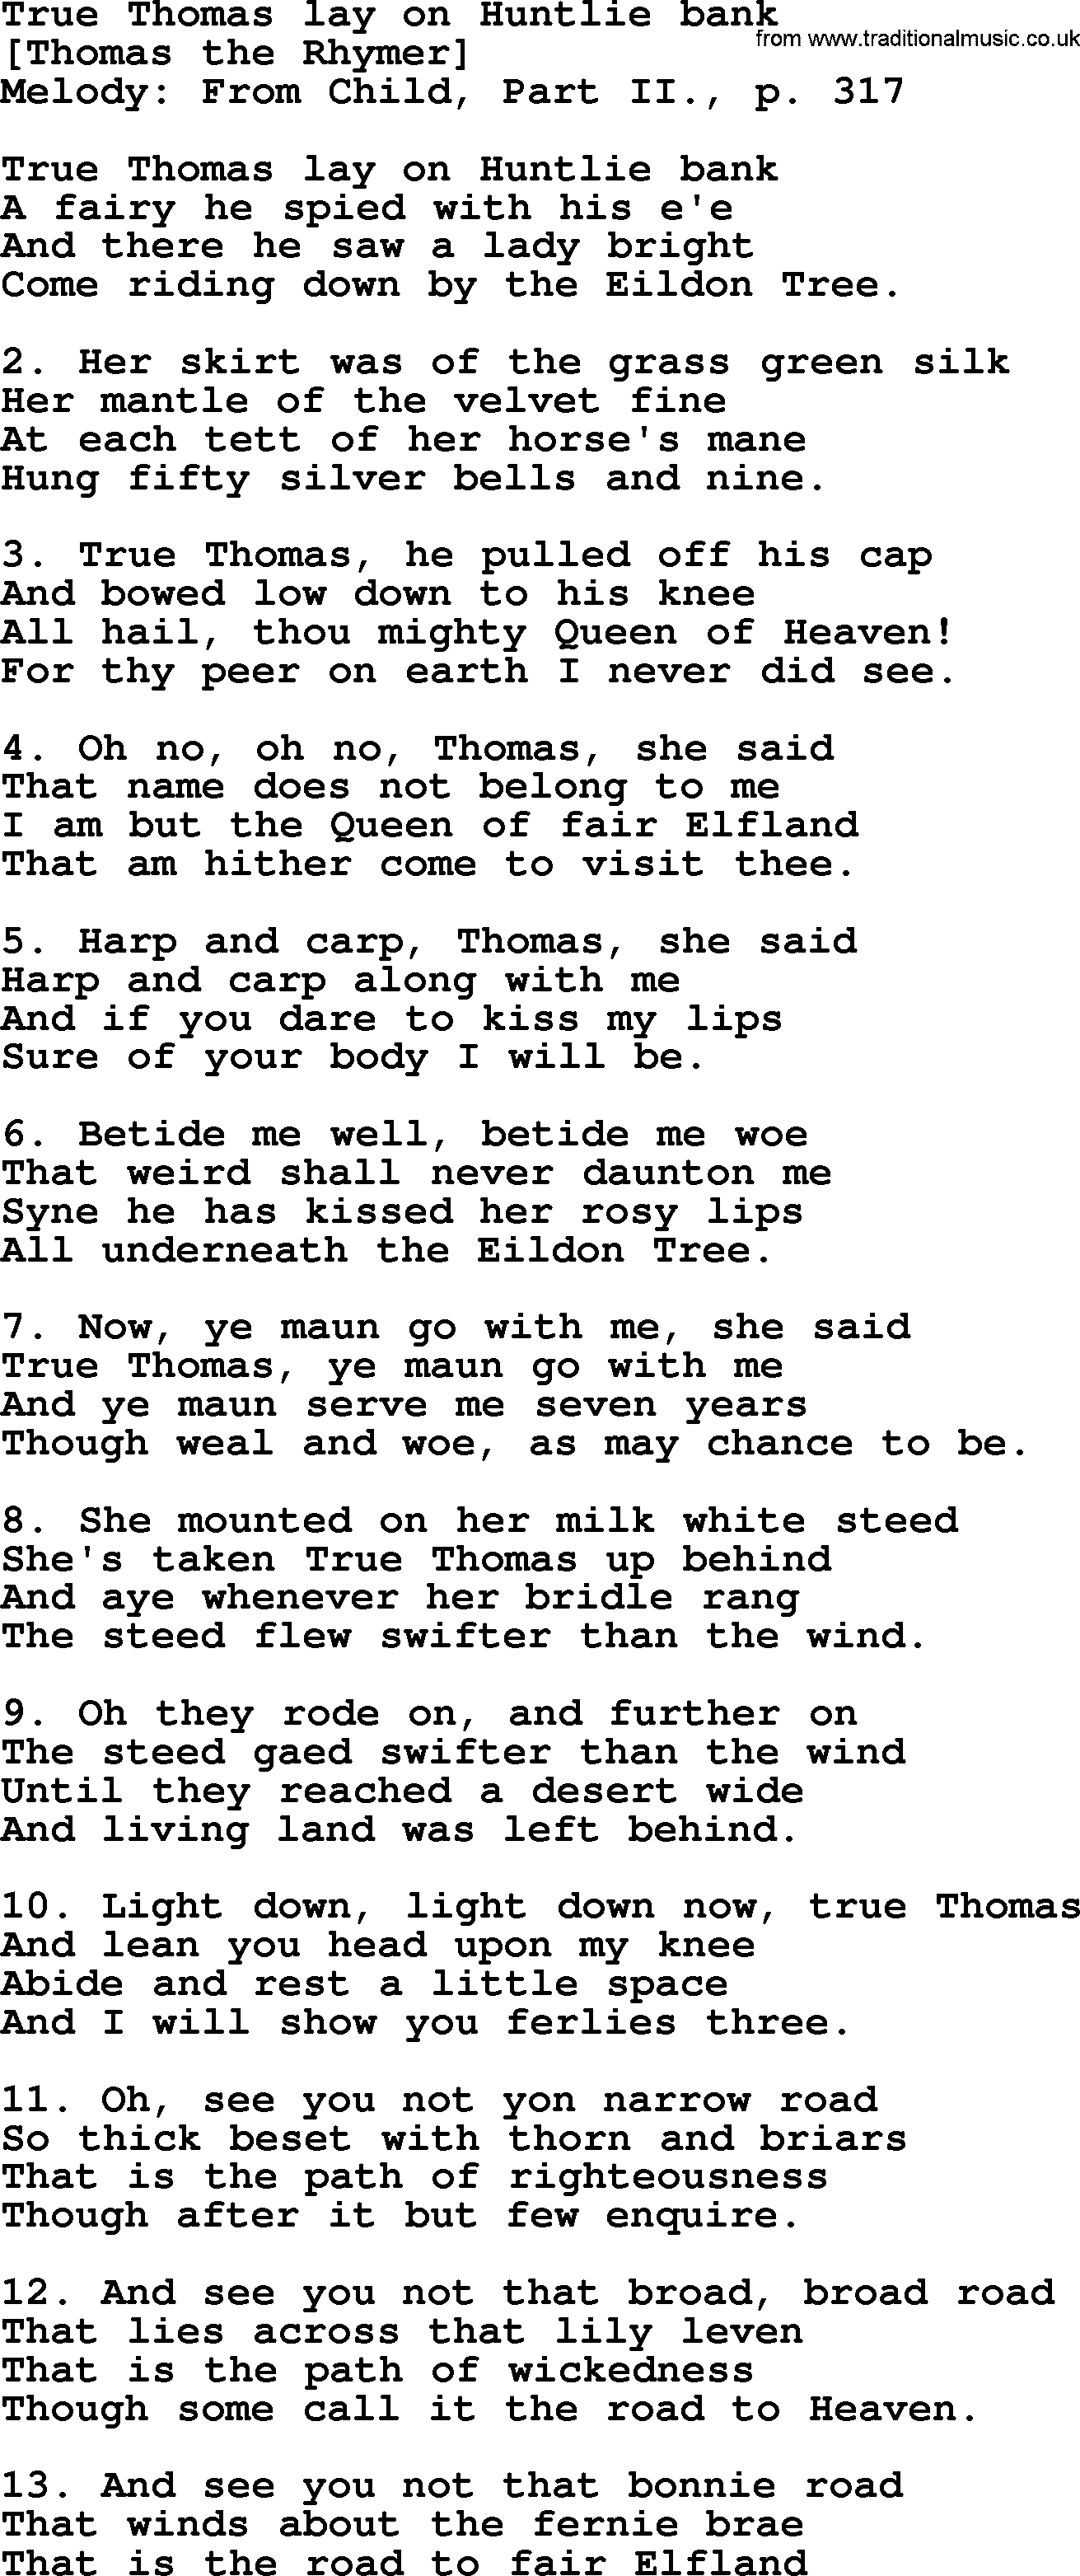 Old English Song: True Thomas Lay On Huntlie Bank lyrics